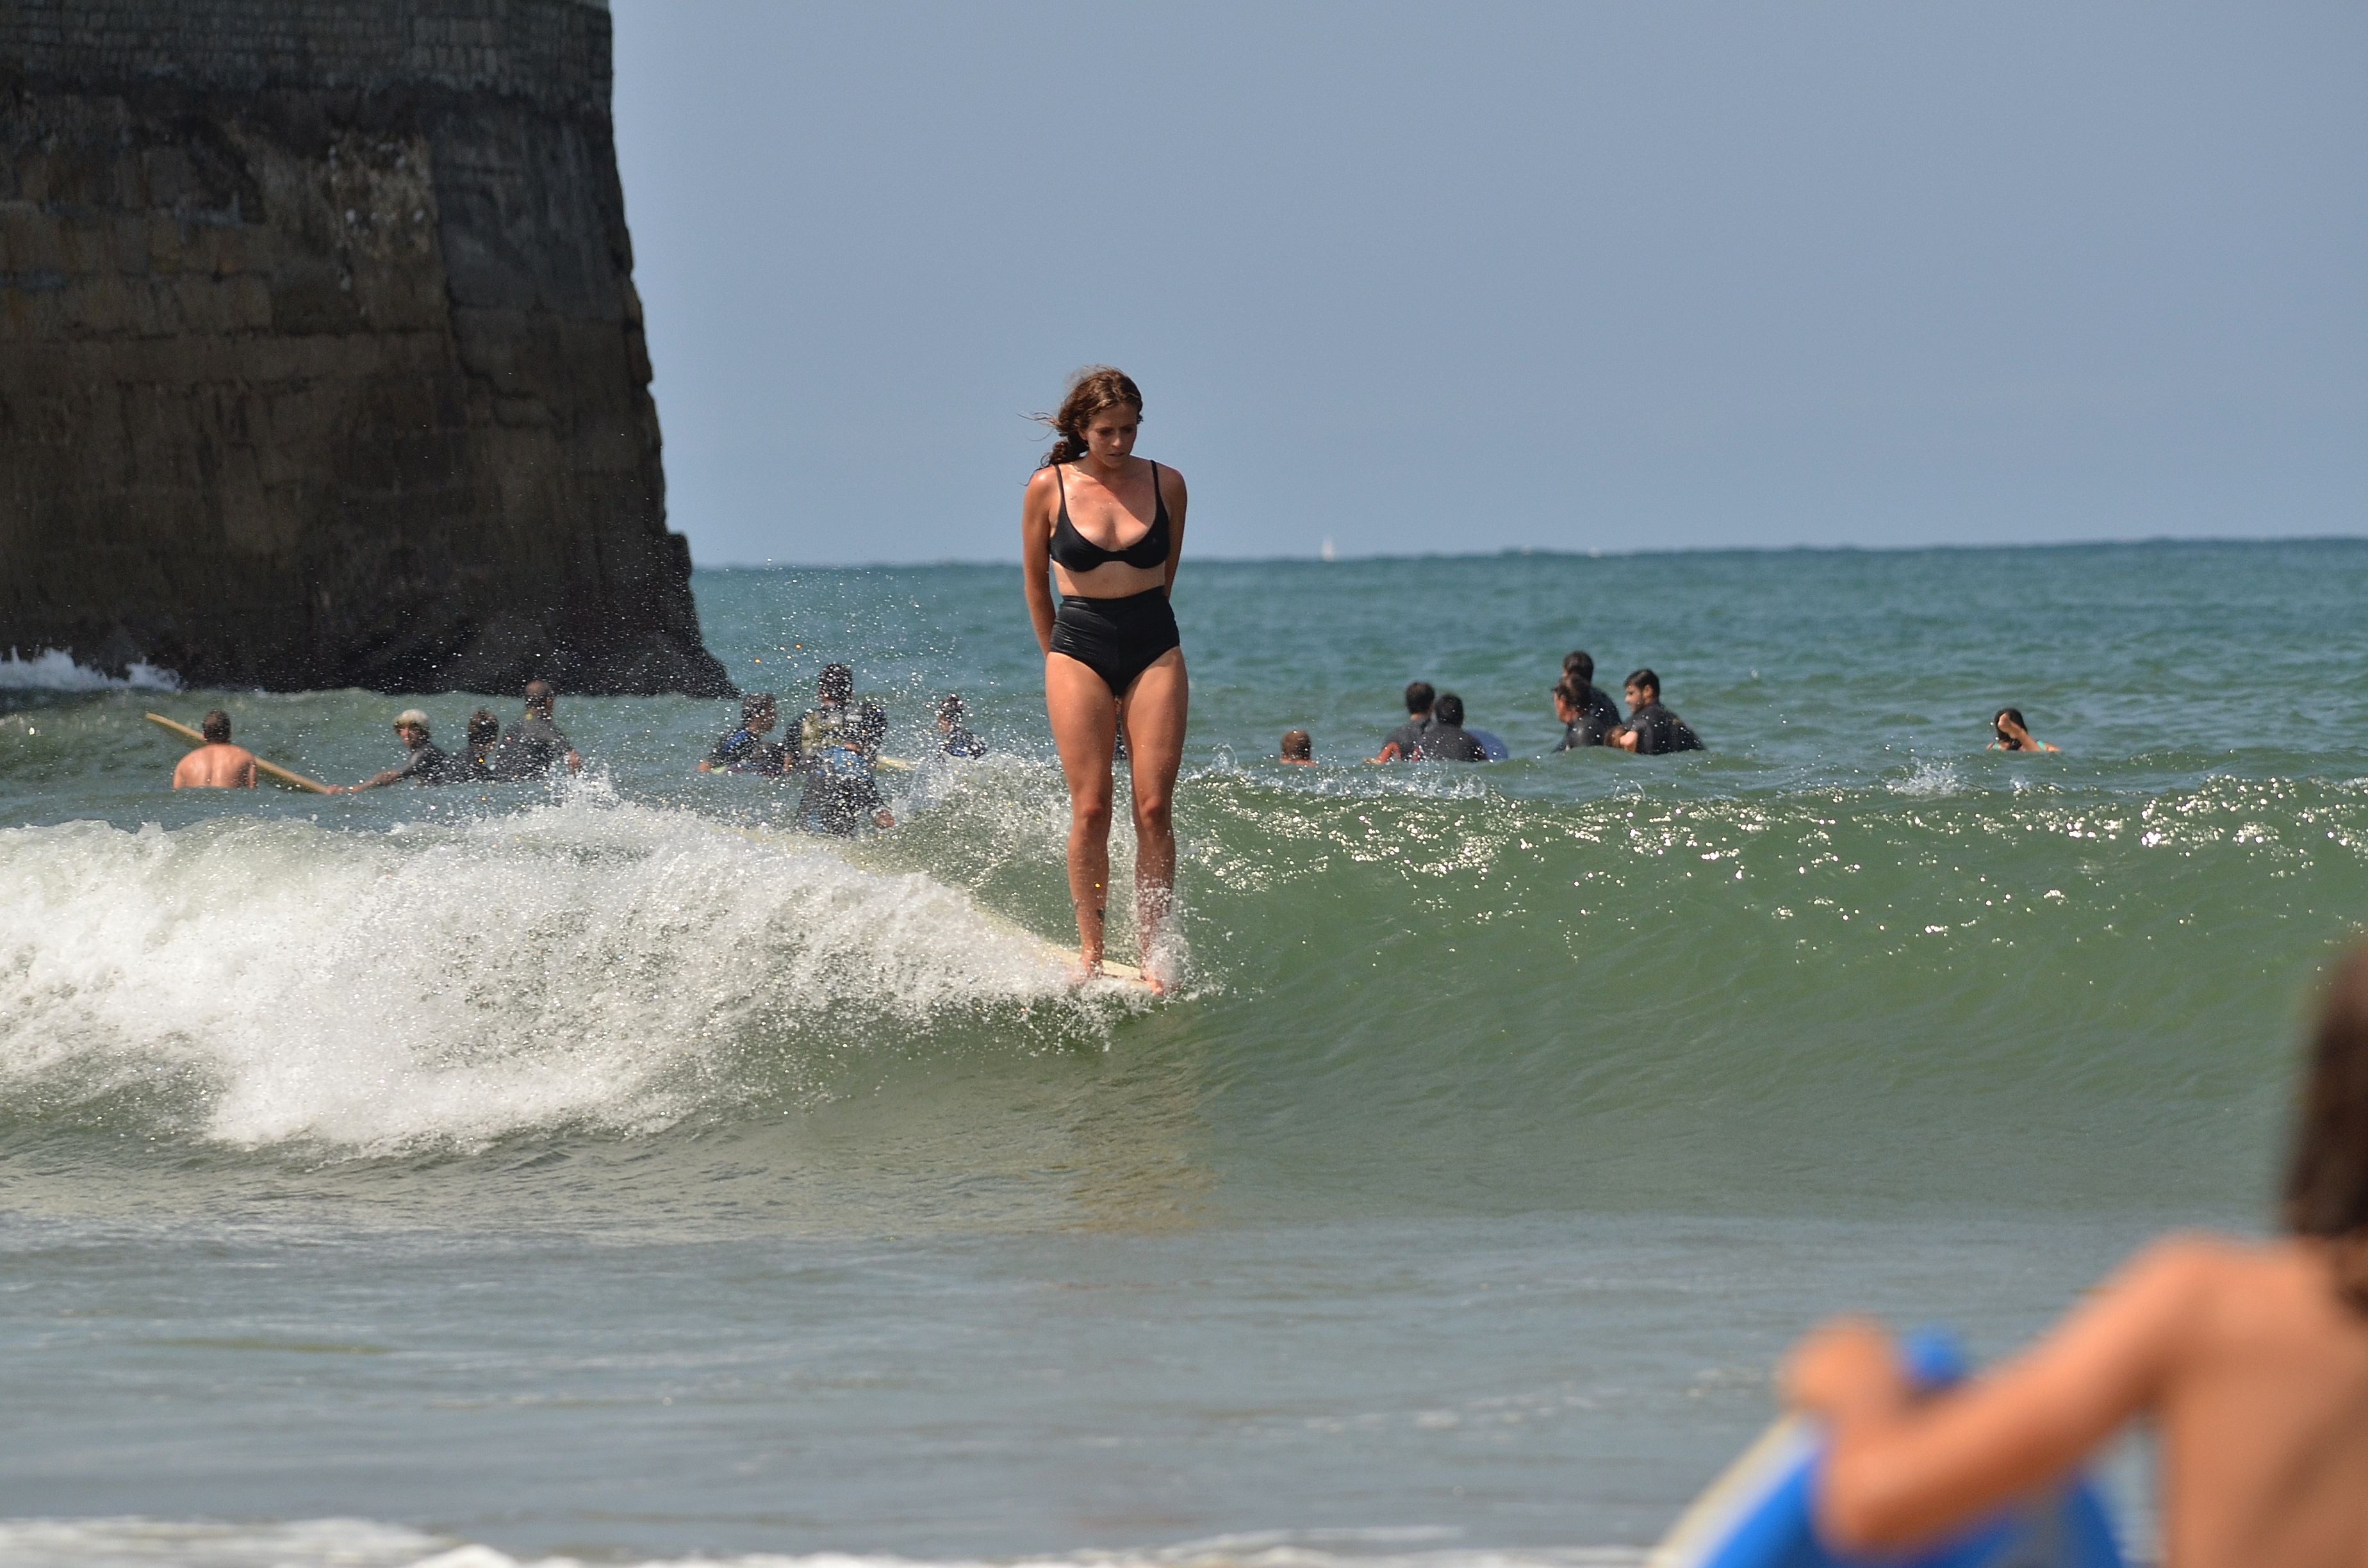 Carlota Jauregui doing a hang ten at her local beach break in Plentzia. Read the story on Alaia Surf